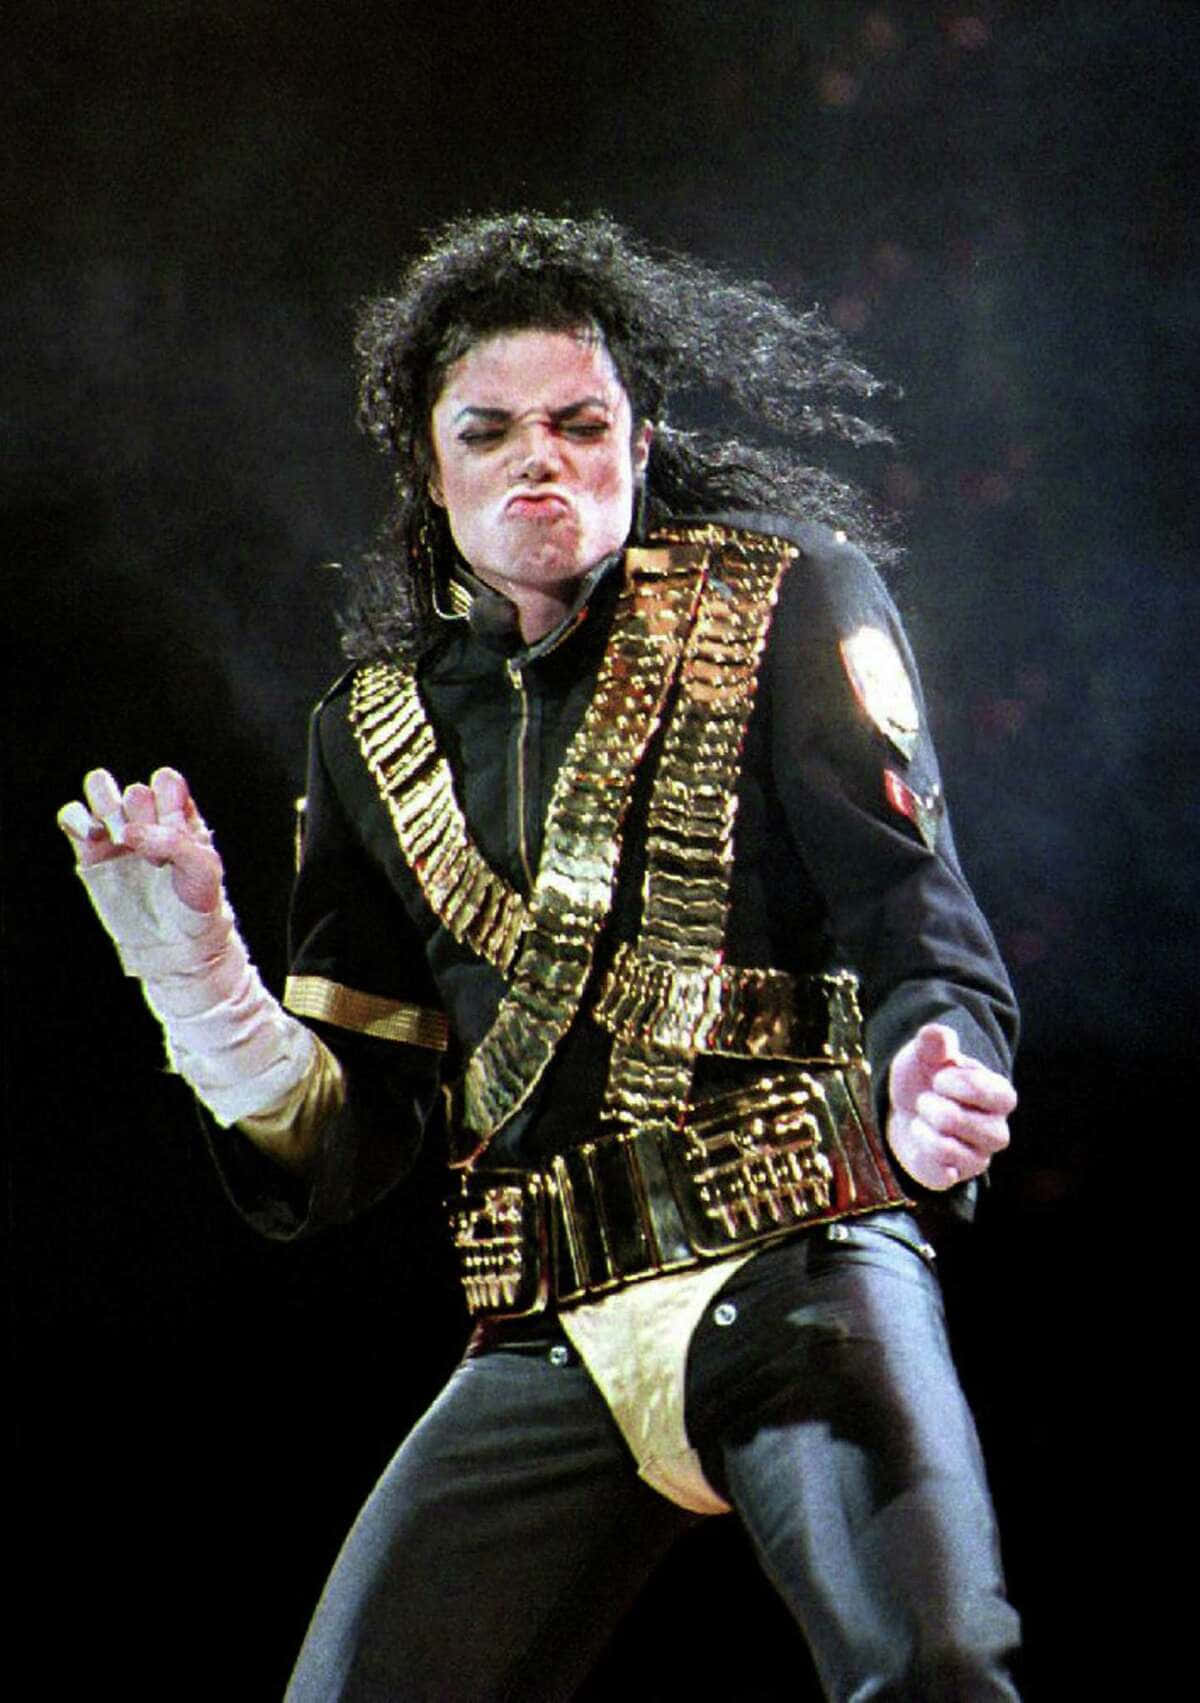 "The King of Pop" - Michael Jackson